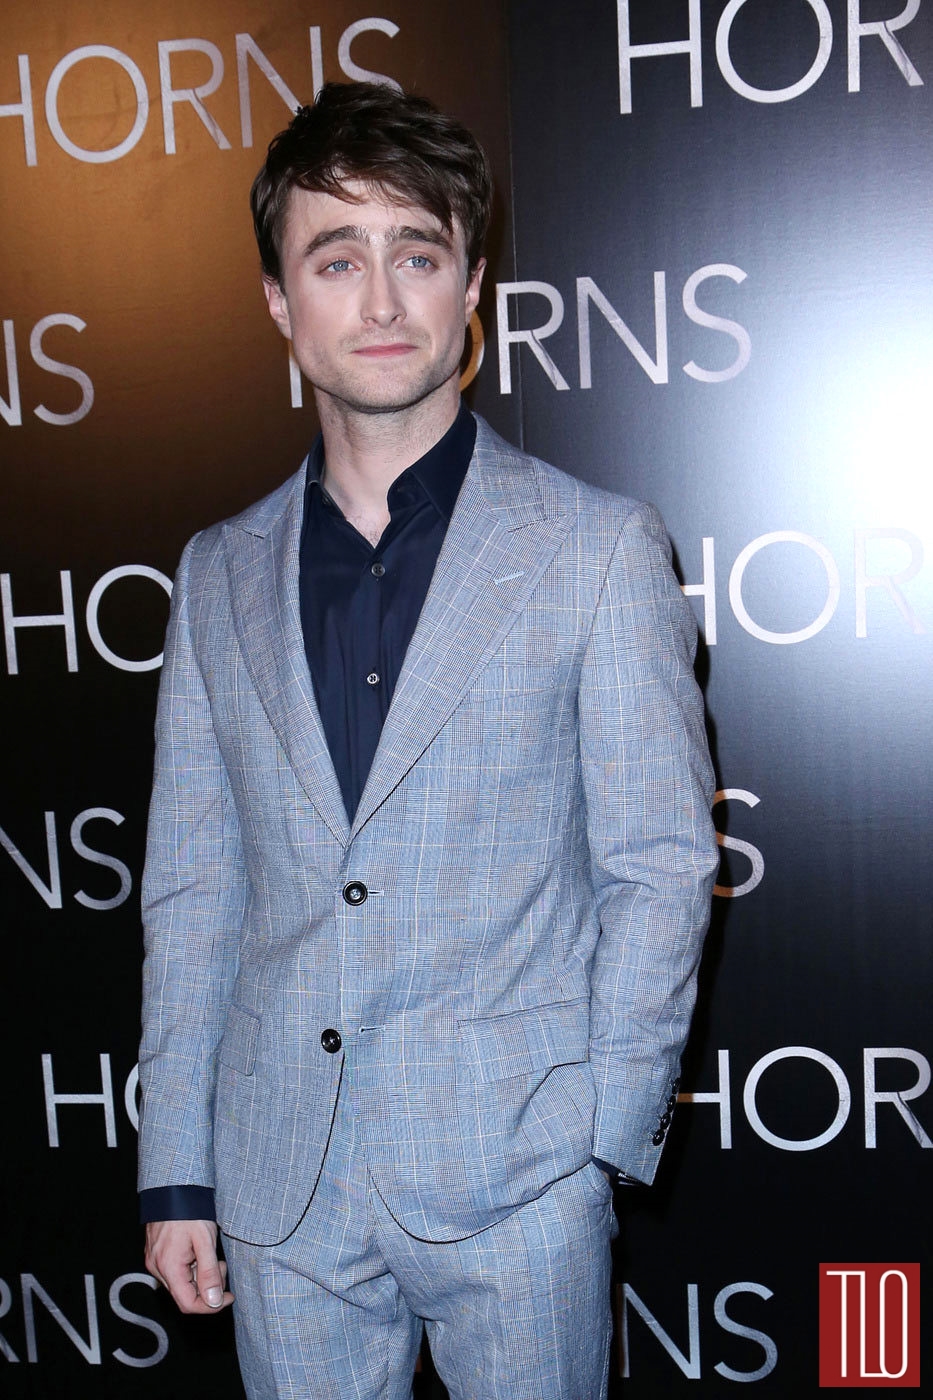 Daniel-Radcliffe-Horns-Paris-Movie-Premiere-Red-Carpet-Dunhill-Fashion-Tom-Lorenzo-Site-TLO (1)